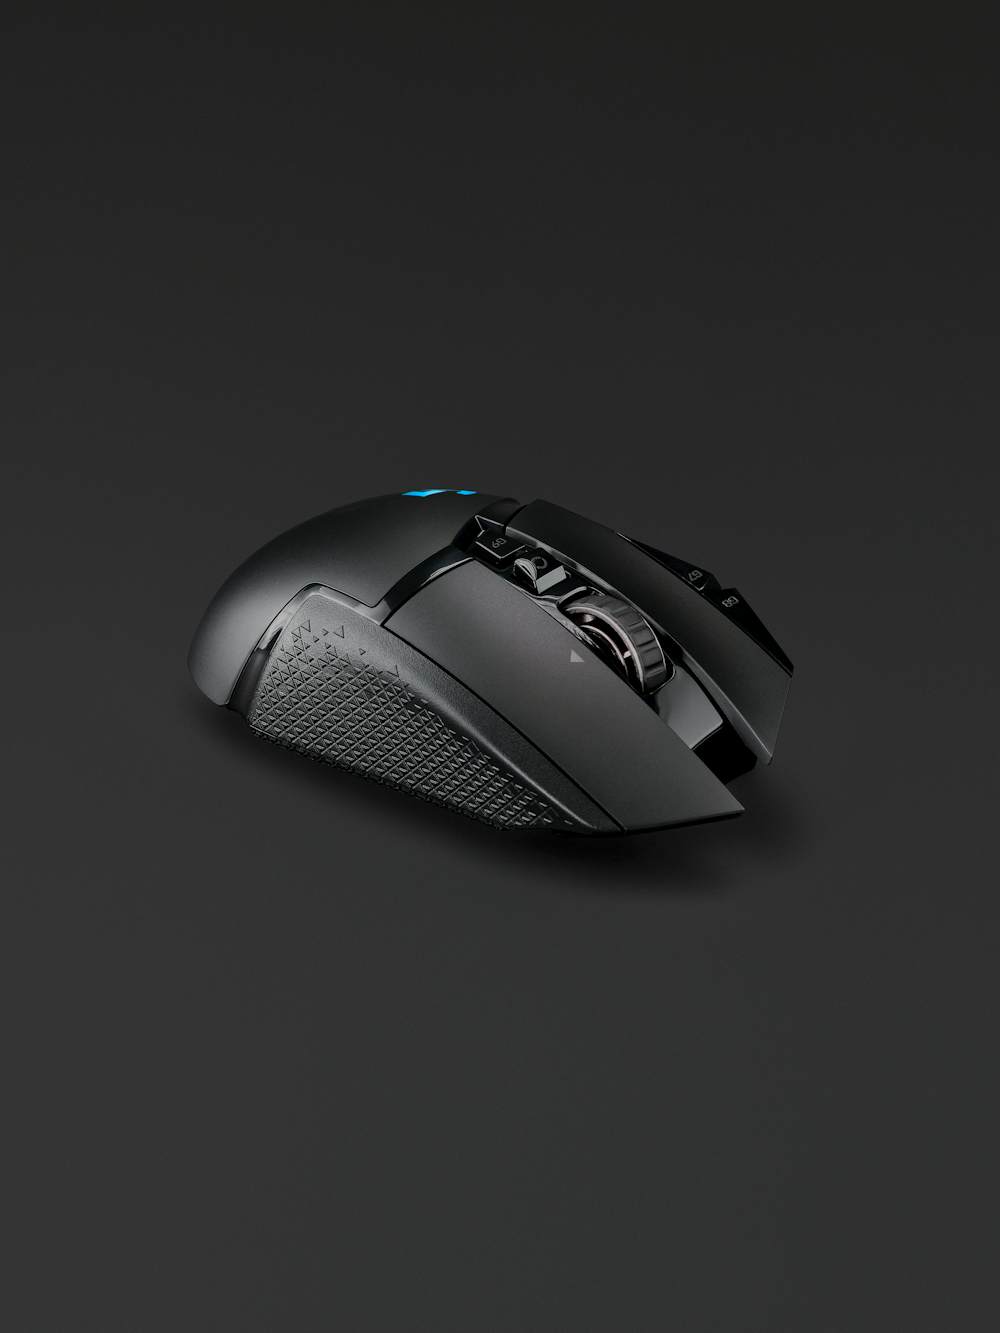 G502 LIGHTSPEED Wireless Gaming Mouse – Herman Miller Store